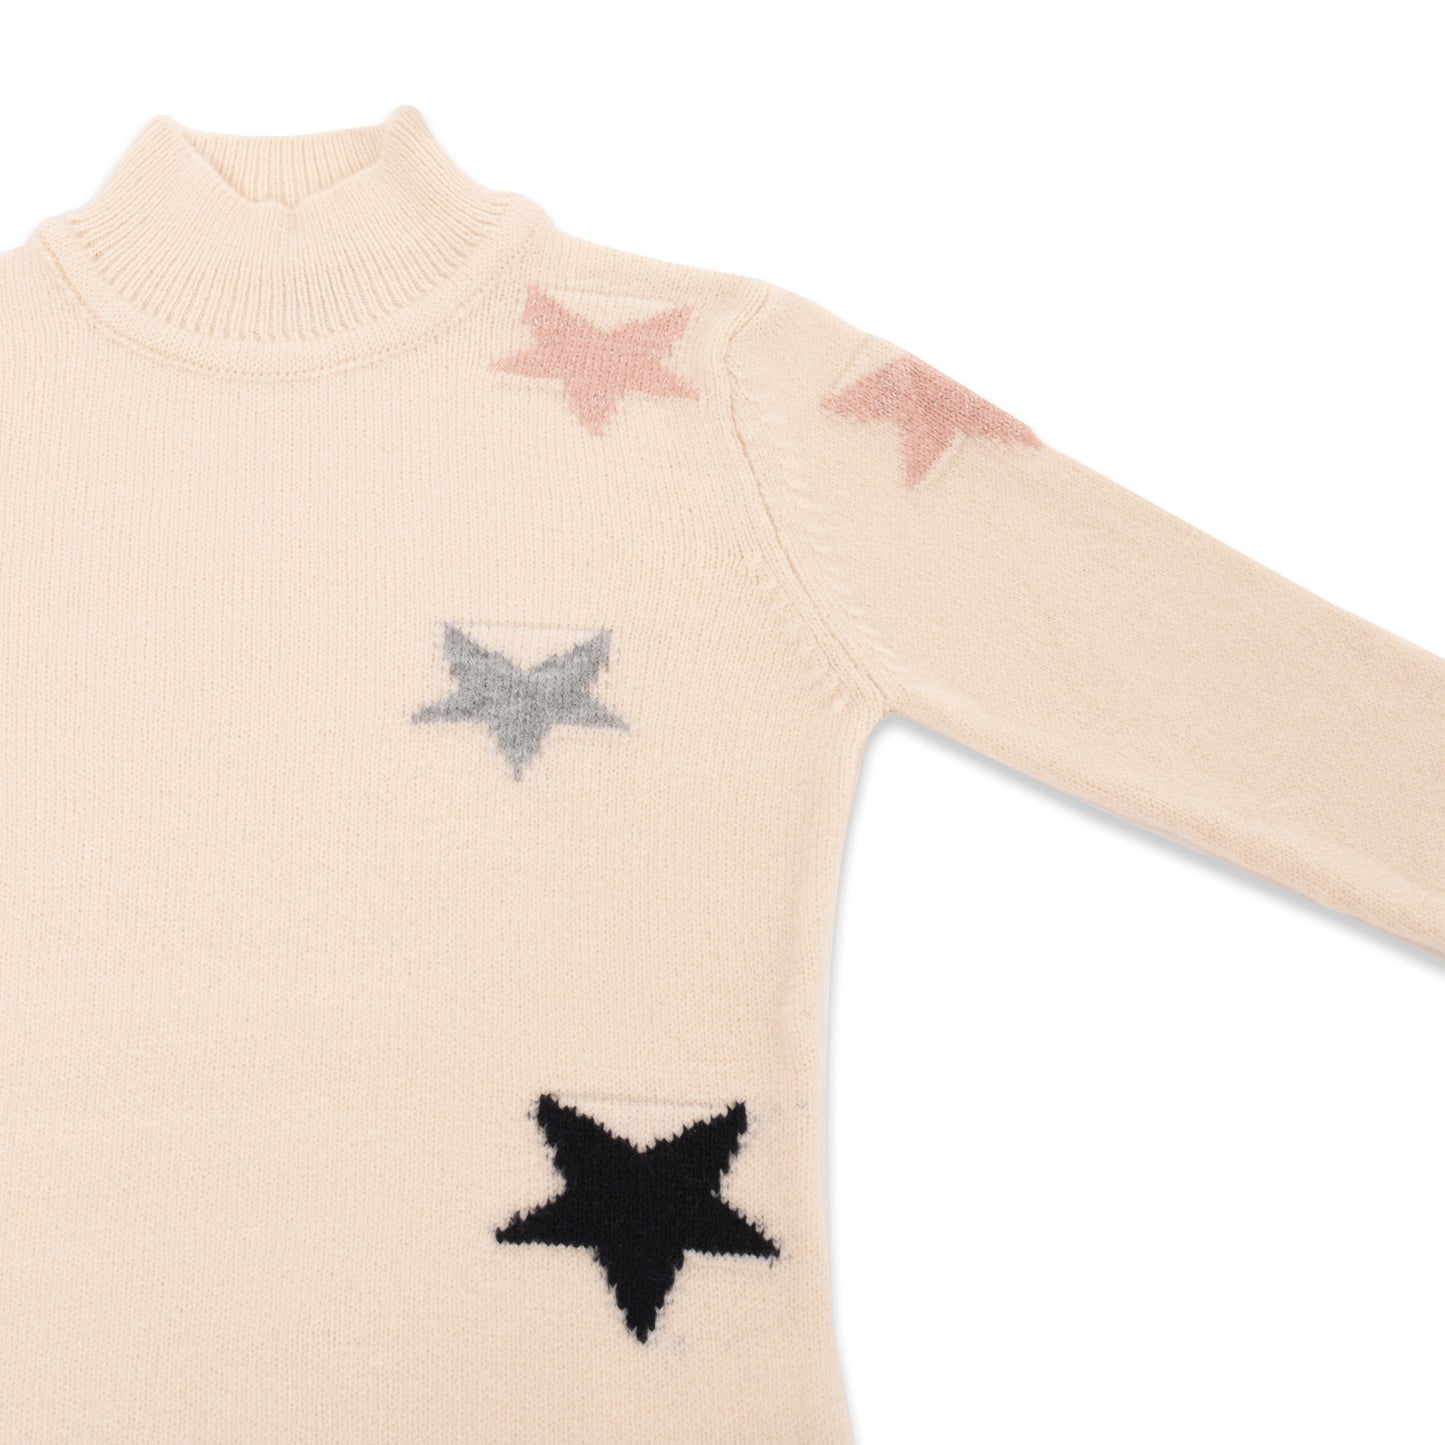 Star Pattern Half Turtleneck Knitted Sweater - HopeKids